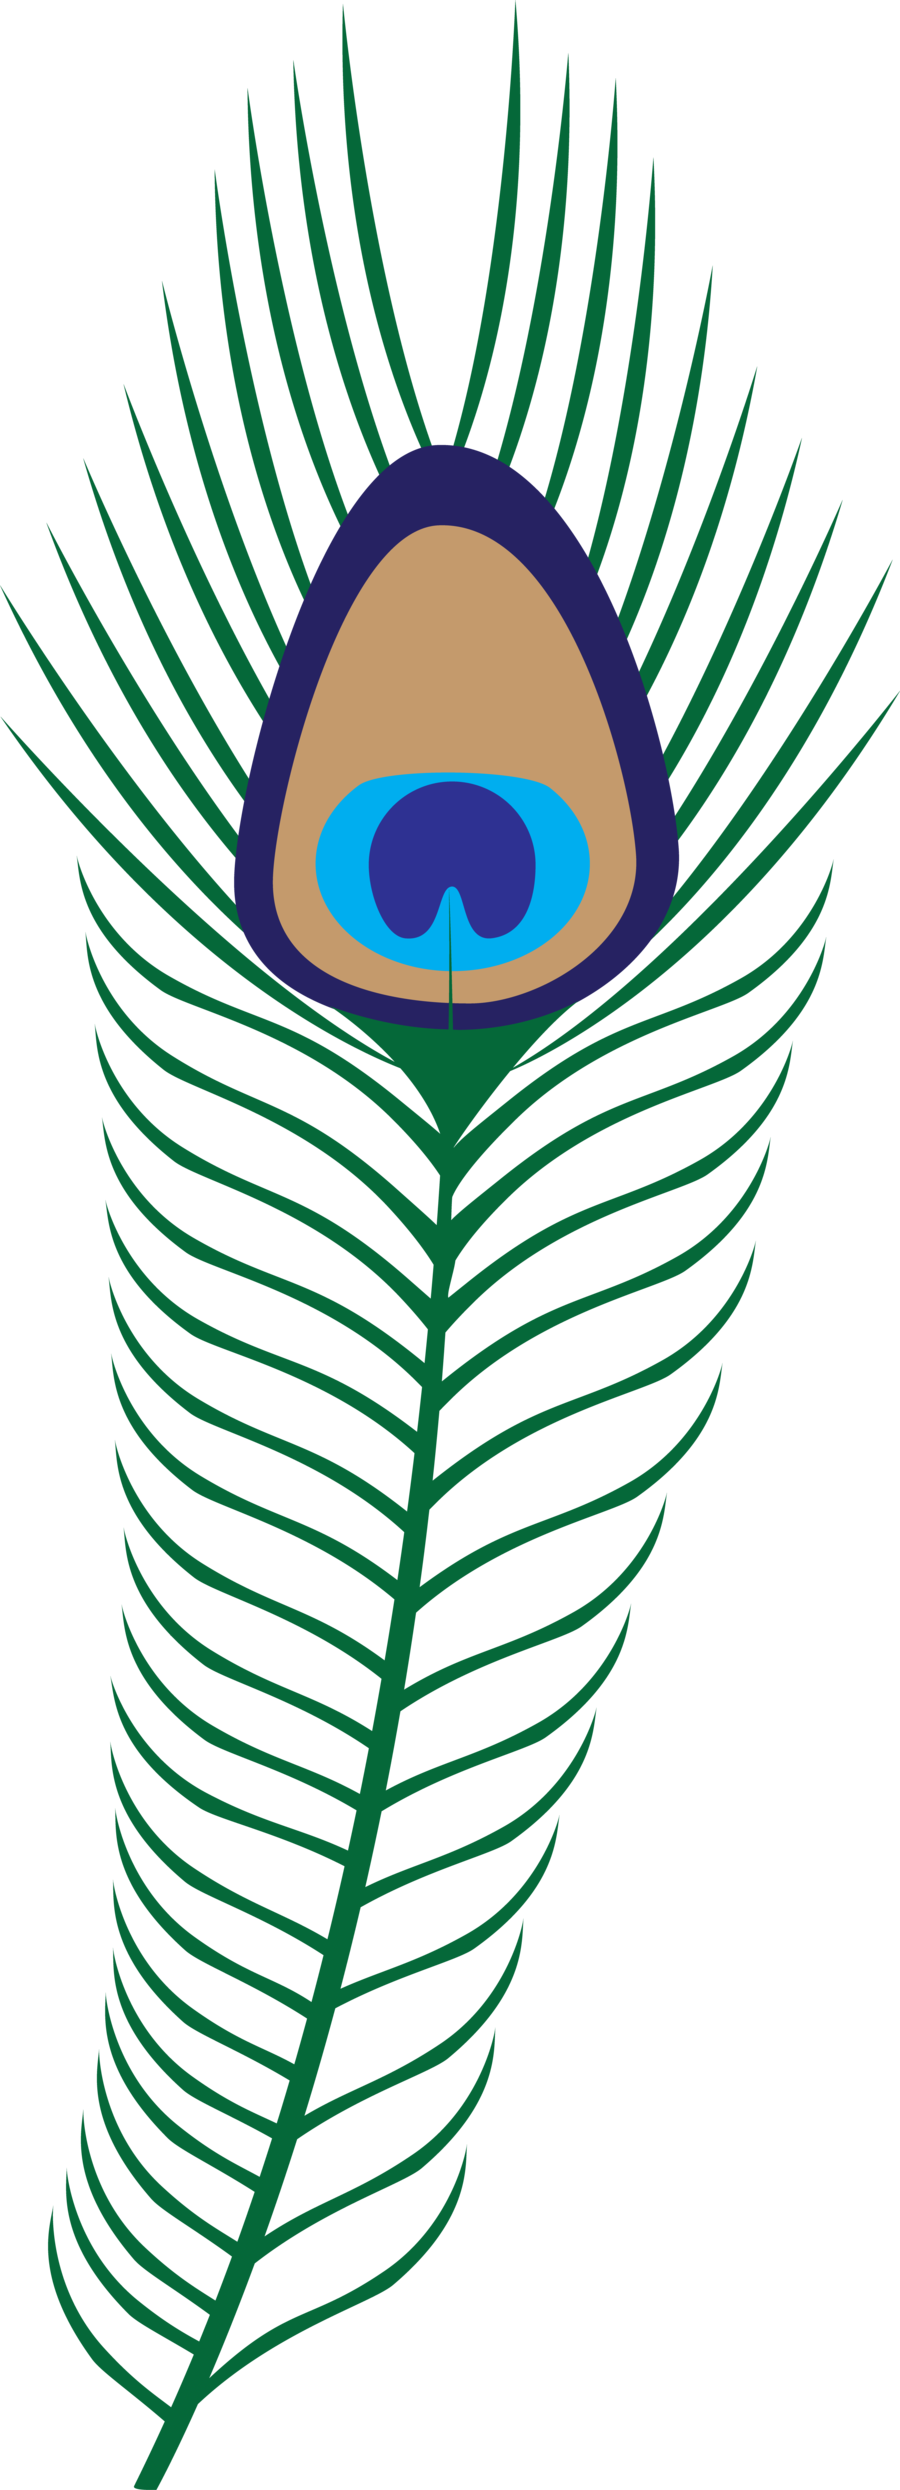 Cartoon Feather Of Peacock